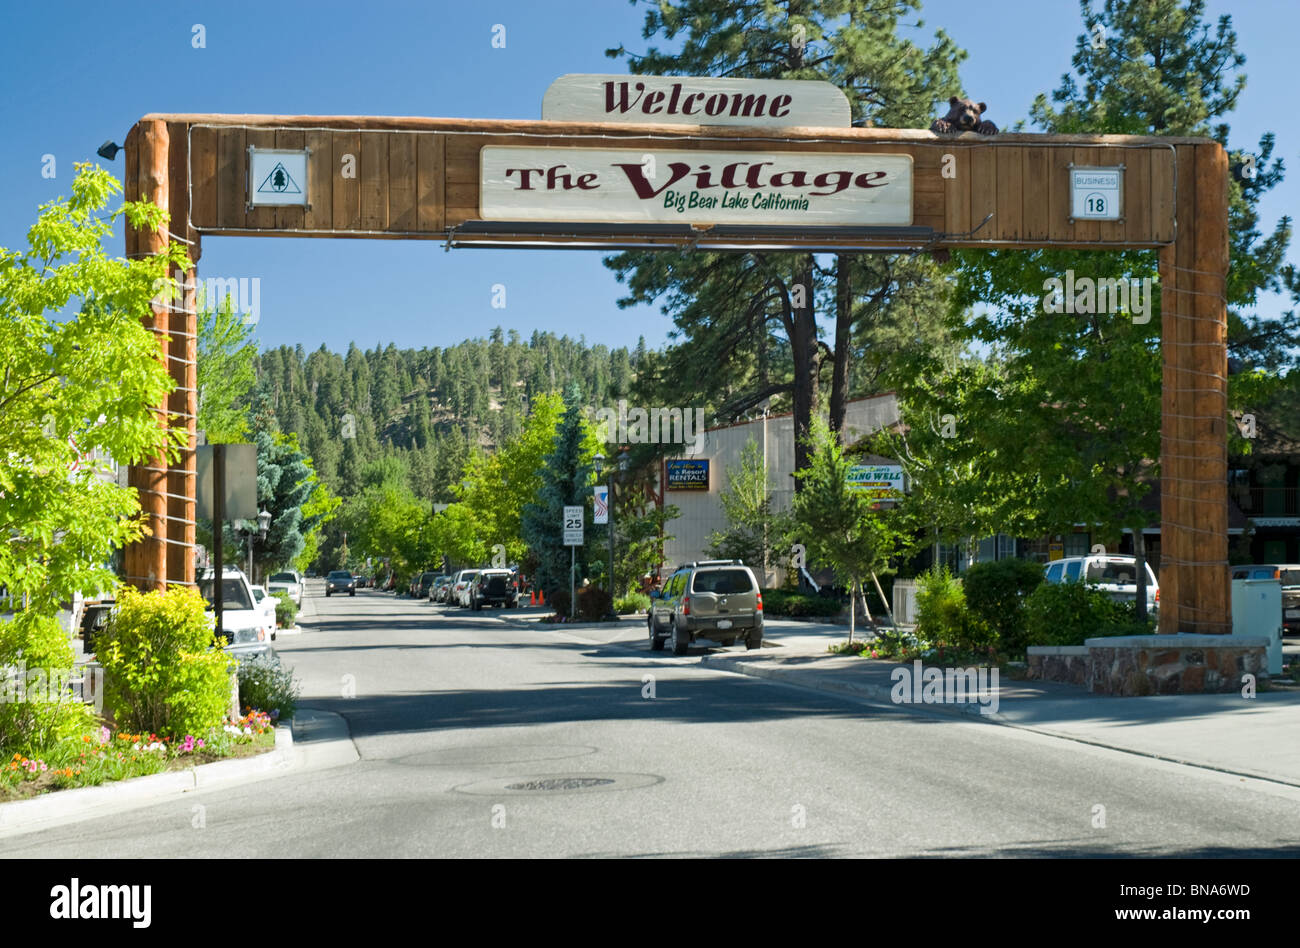 Big bear california village hi-res stock photography and images - Alamy